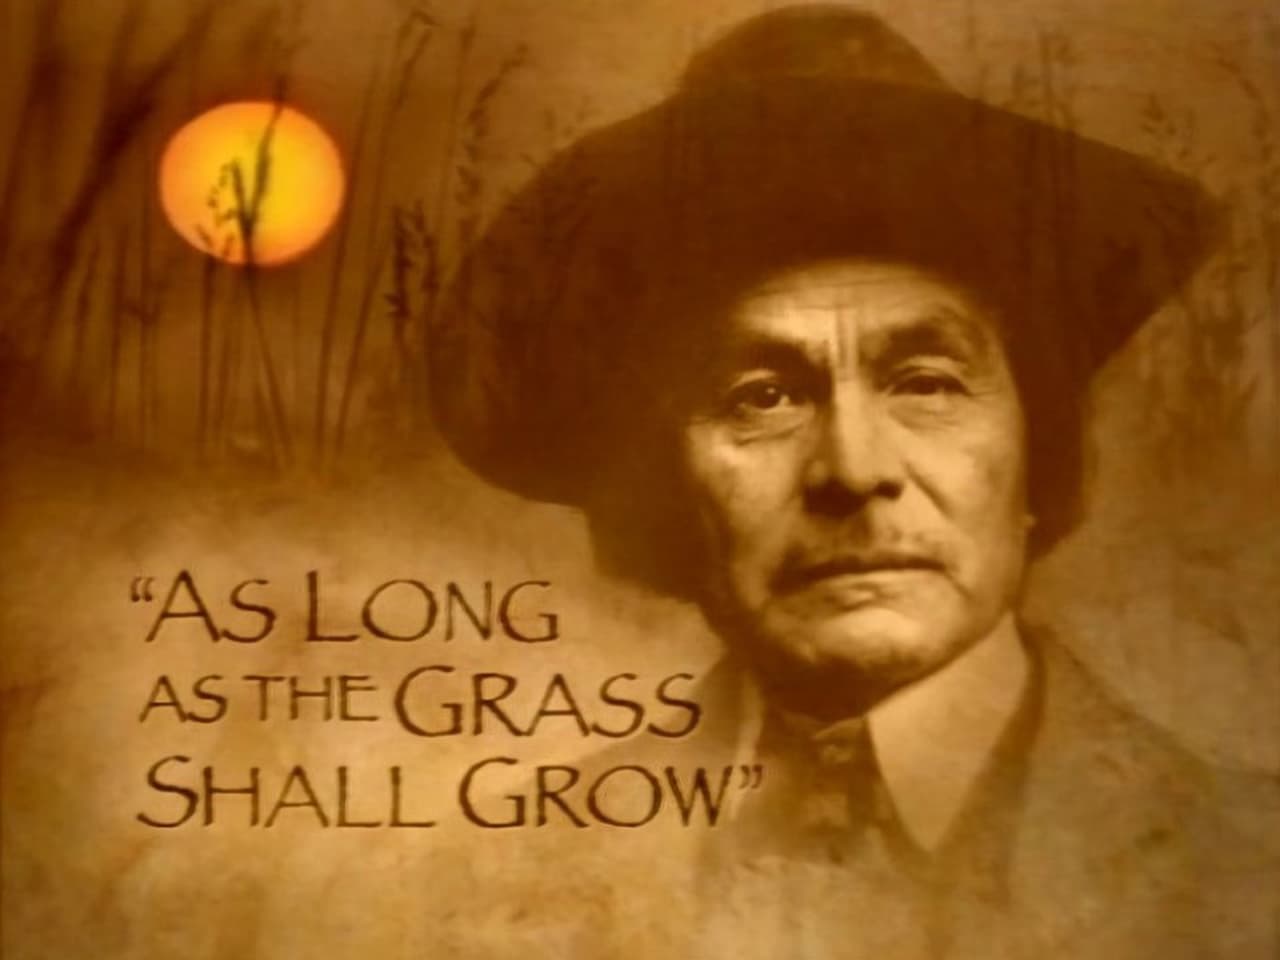 As Long As the Grass Shall Grow